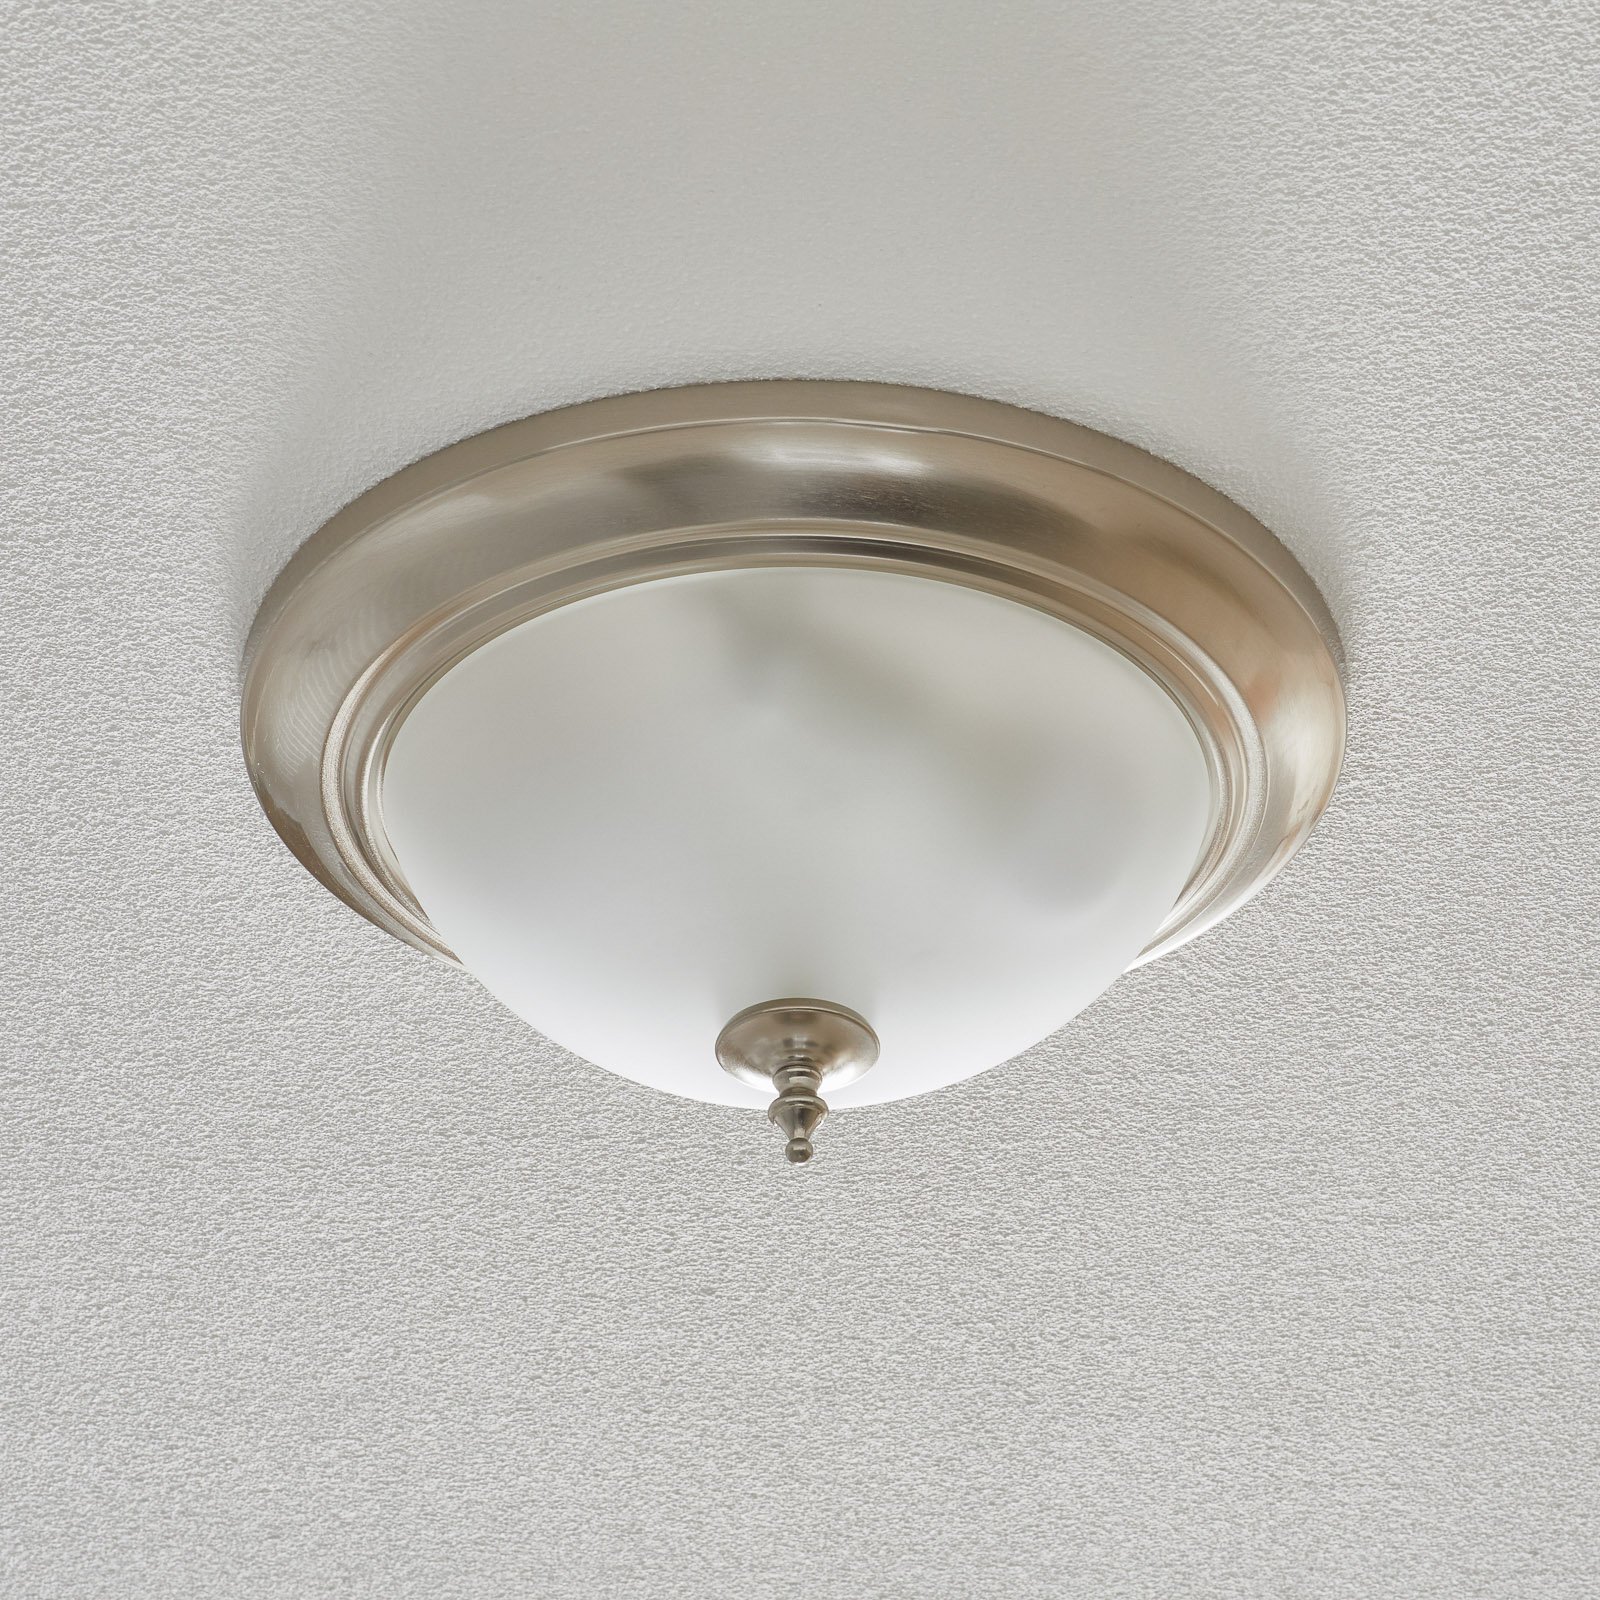 Westinghouse Harwell ceiling light, nickel